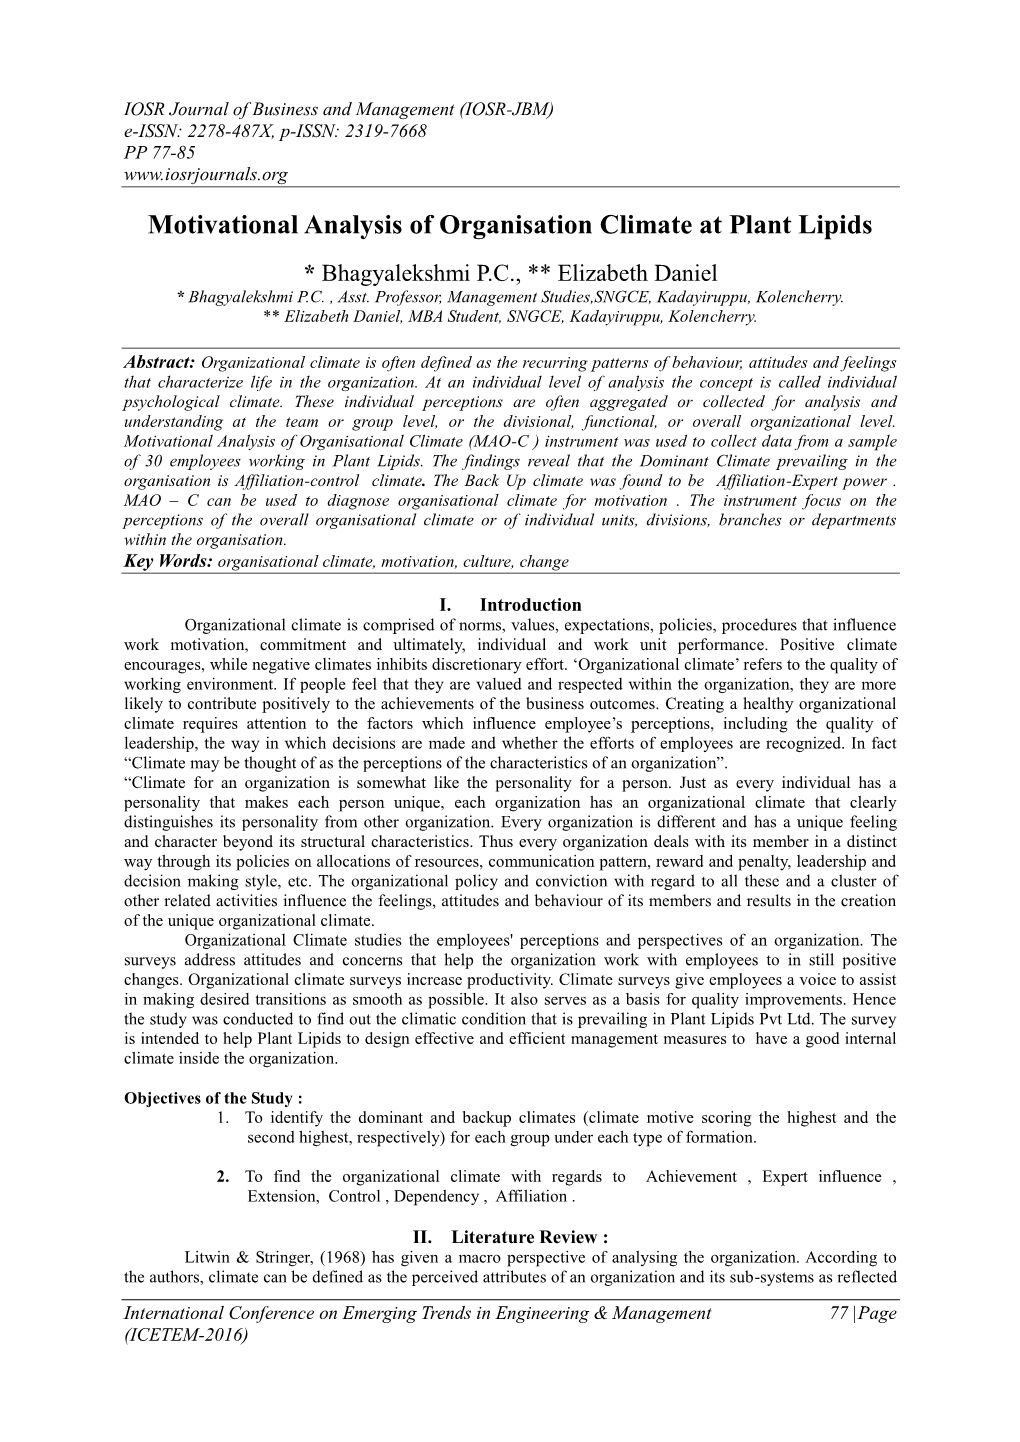 Motivational Analysis of Organisation Climate at Plant Lipids